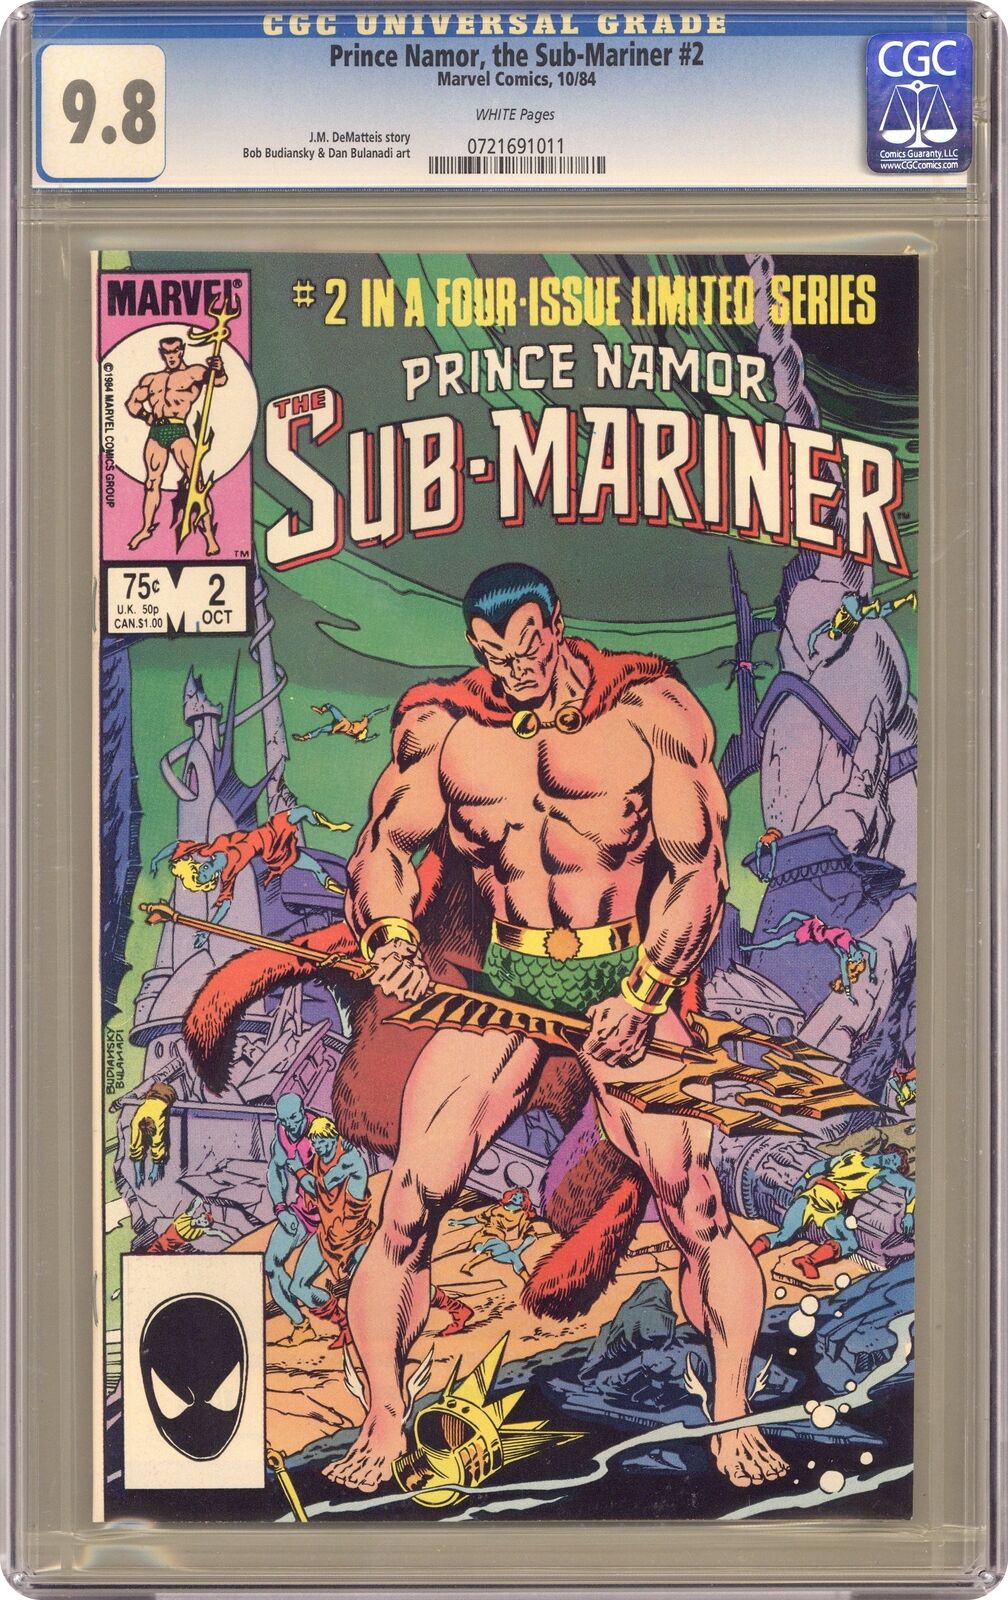 Prince Namor the Sub-Mariner #2 CGC 9.8 1984 0721691011